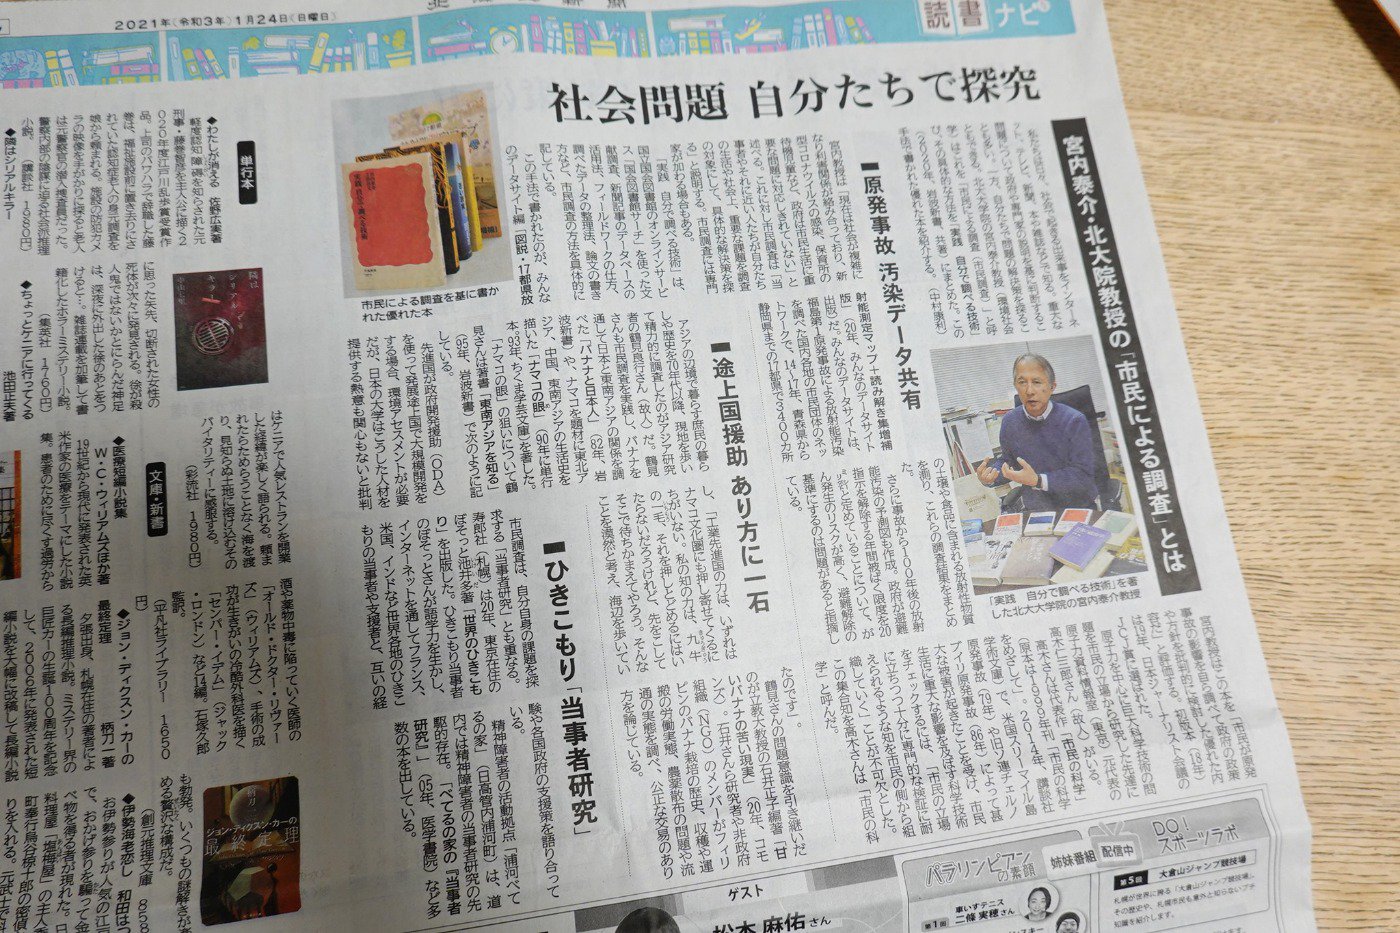 image:【掲載】2021年1月24日北海道新聞「読書ナビ」にて増補版が紹介されました